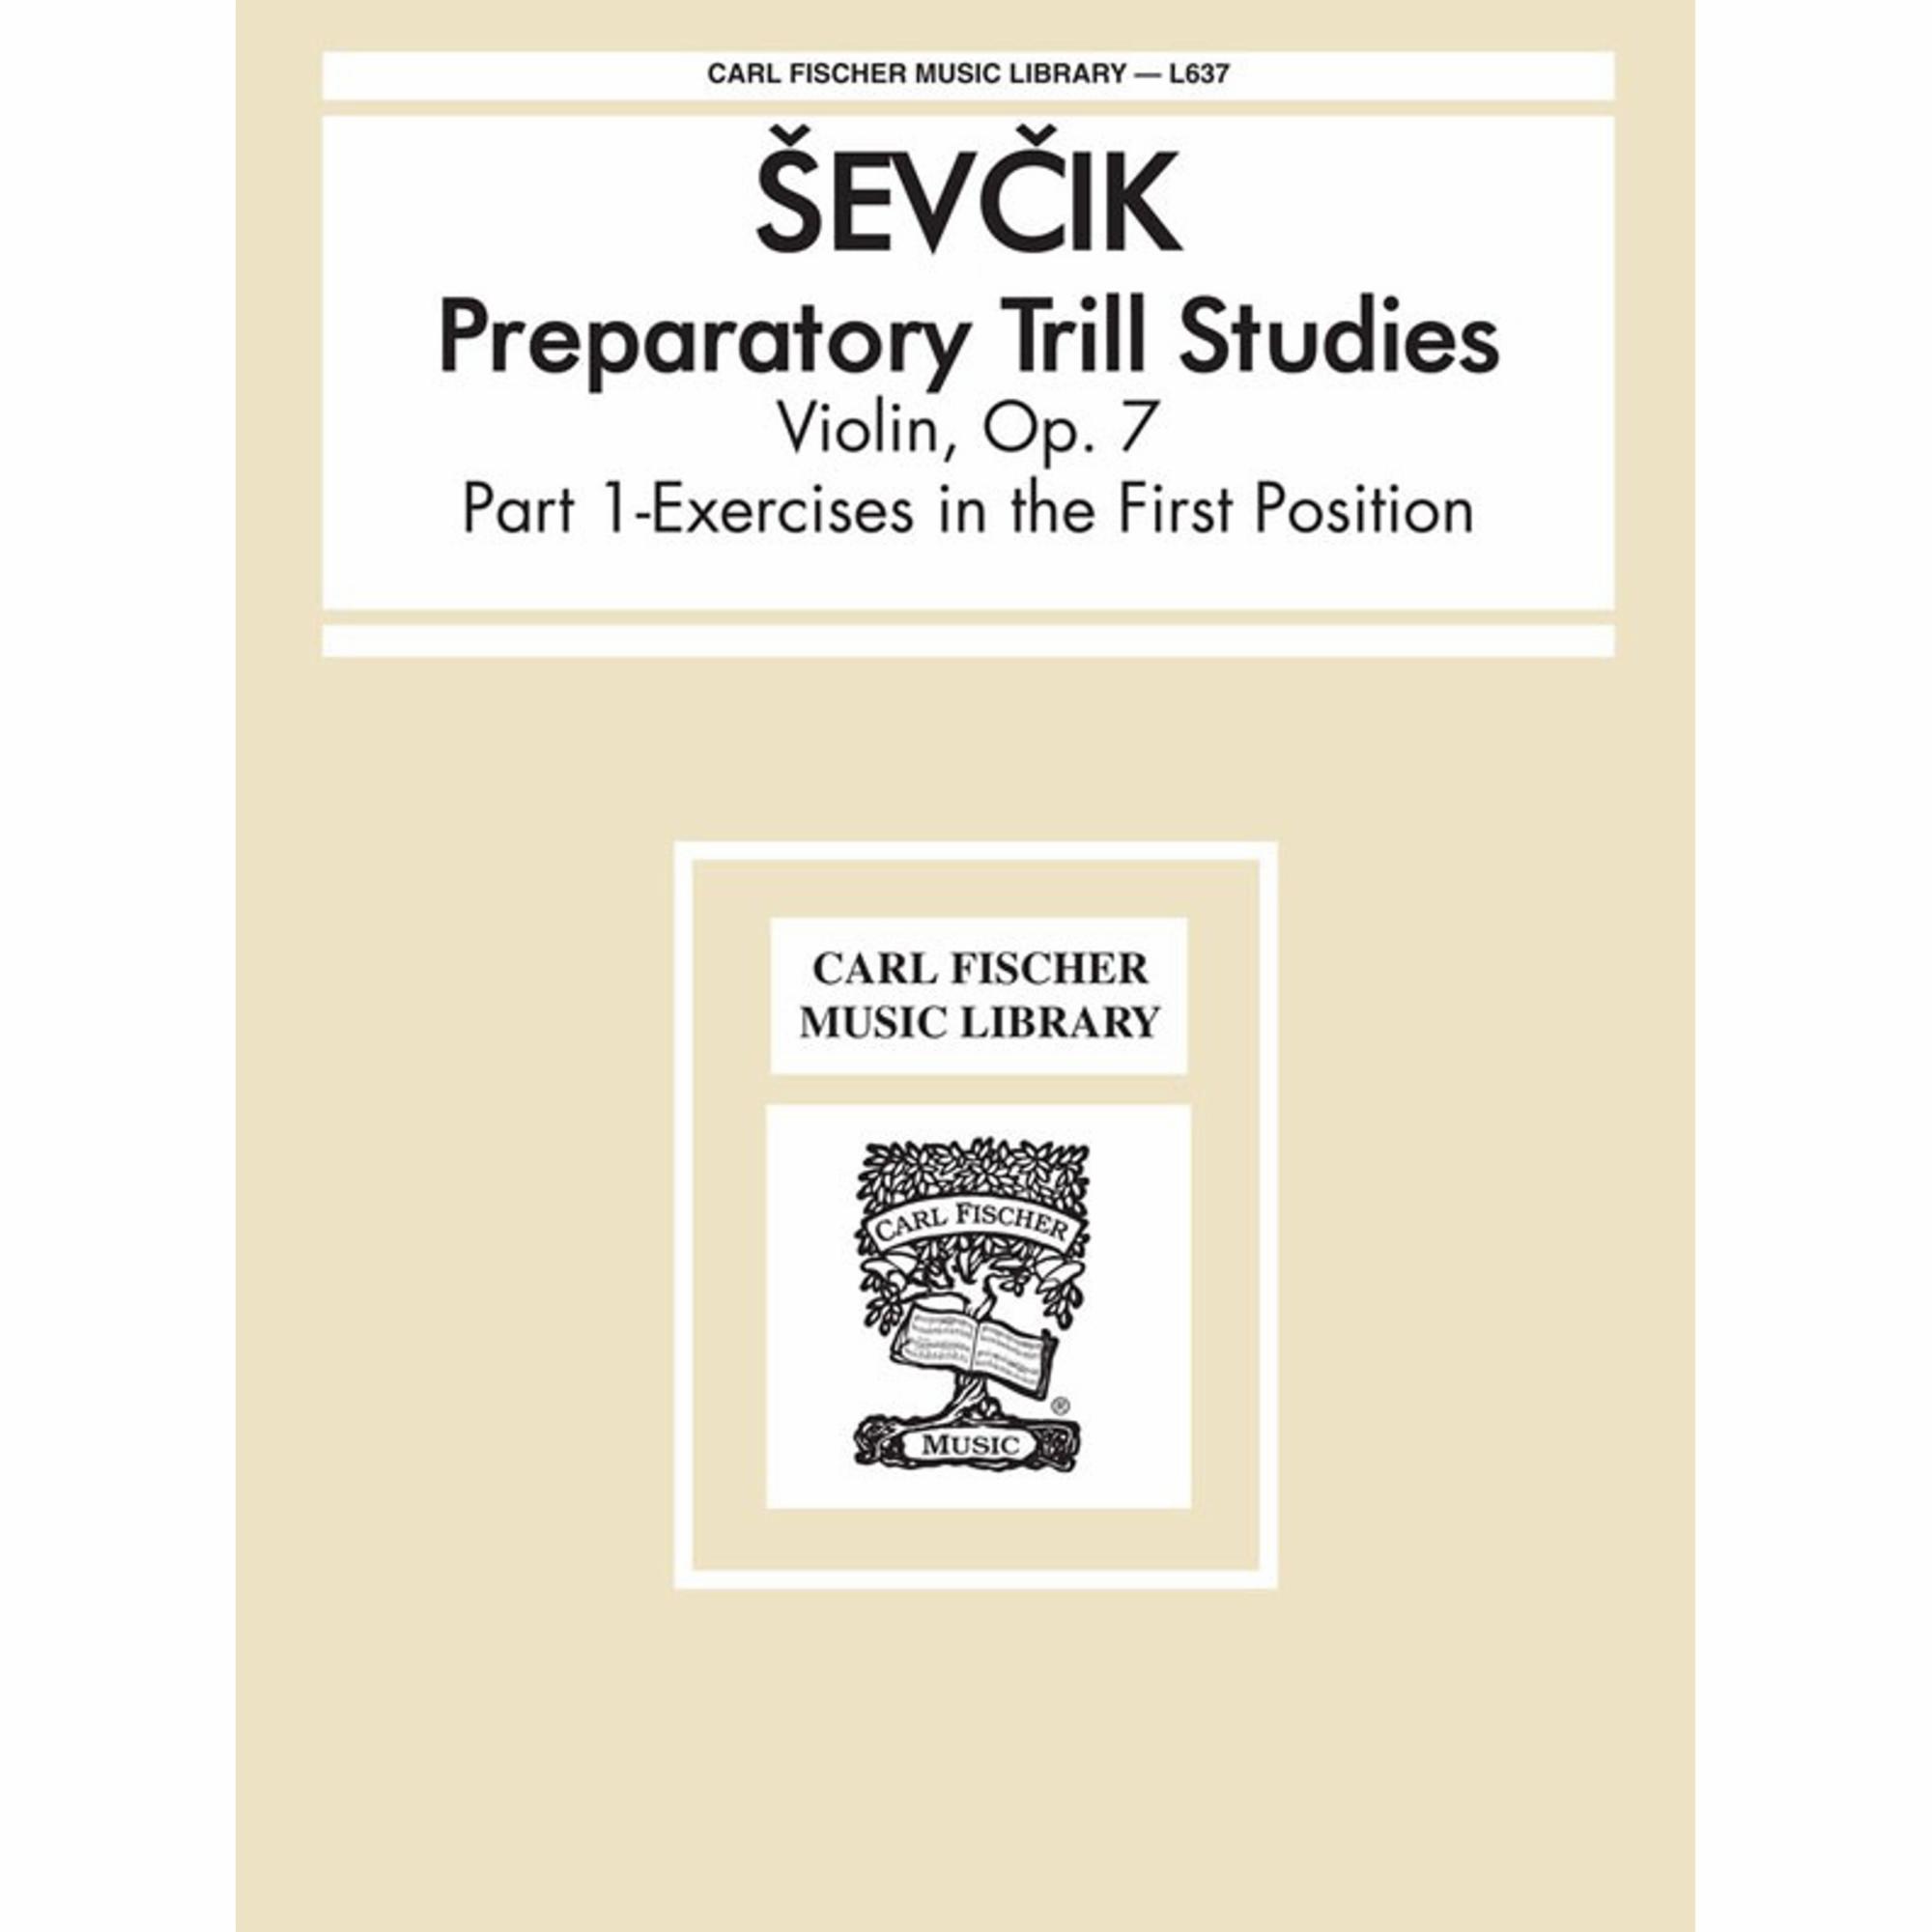 Sevcik -- Preparatory Trill Studies for Violin, Op. 7, Part 1 for Violin